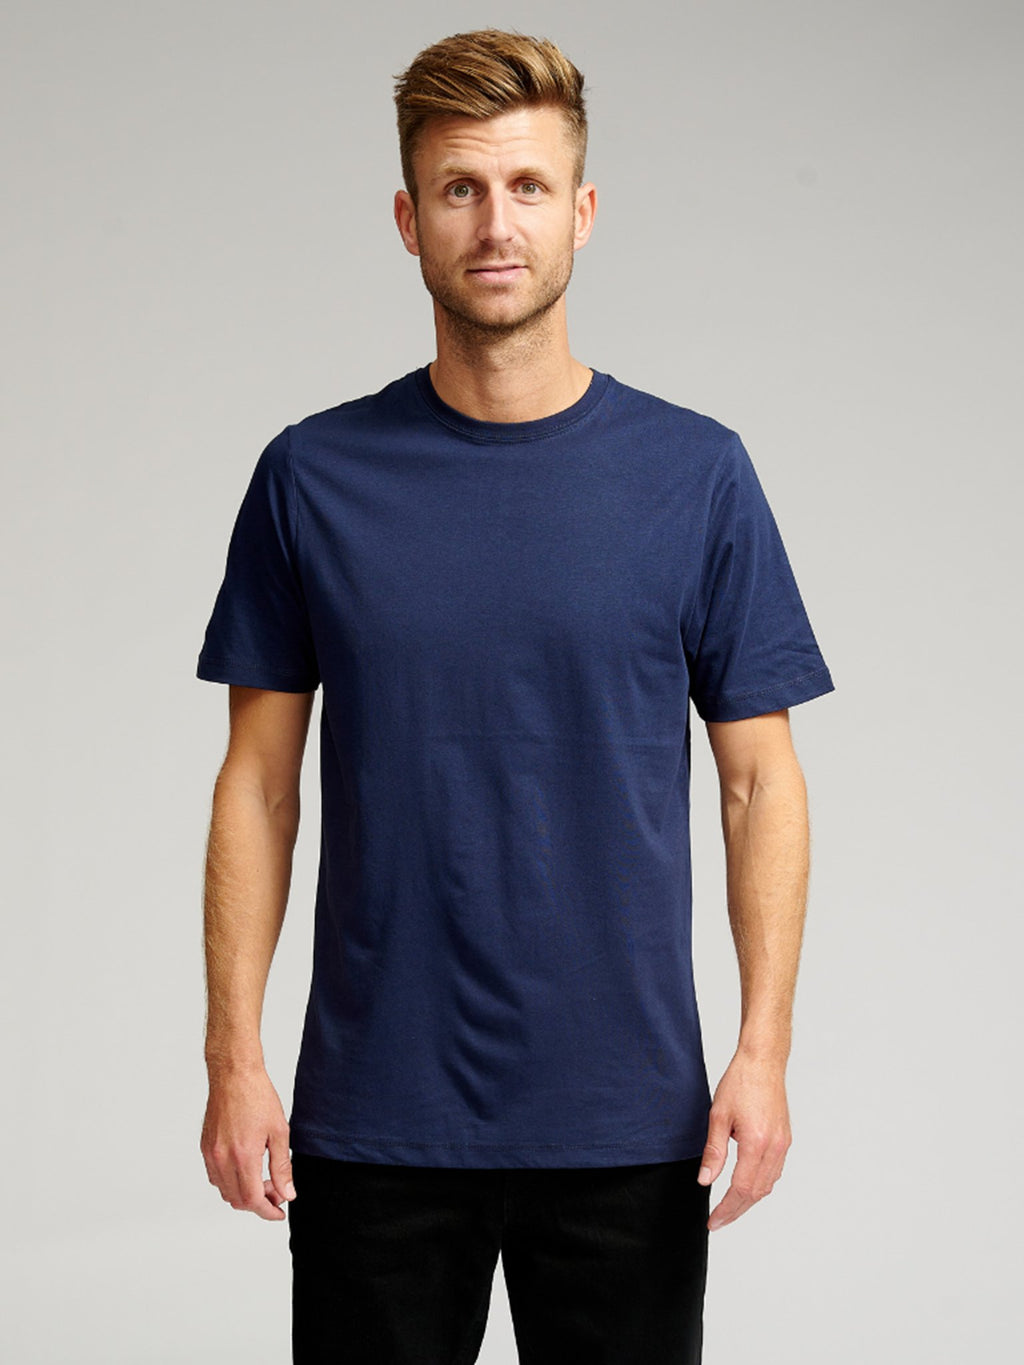 Organic Basic T-Shirts – Package Deal 9 pcs. (V.I.P)